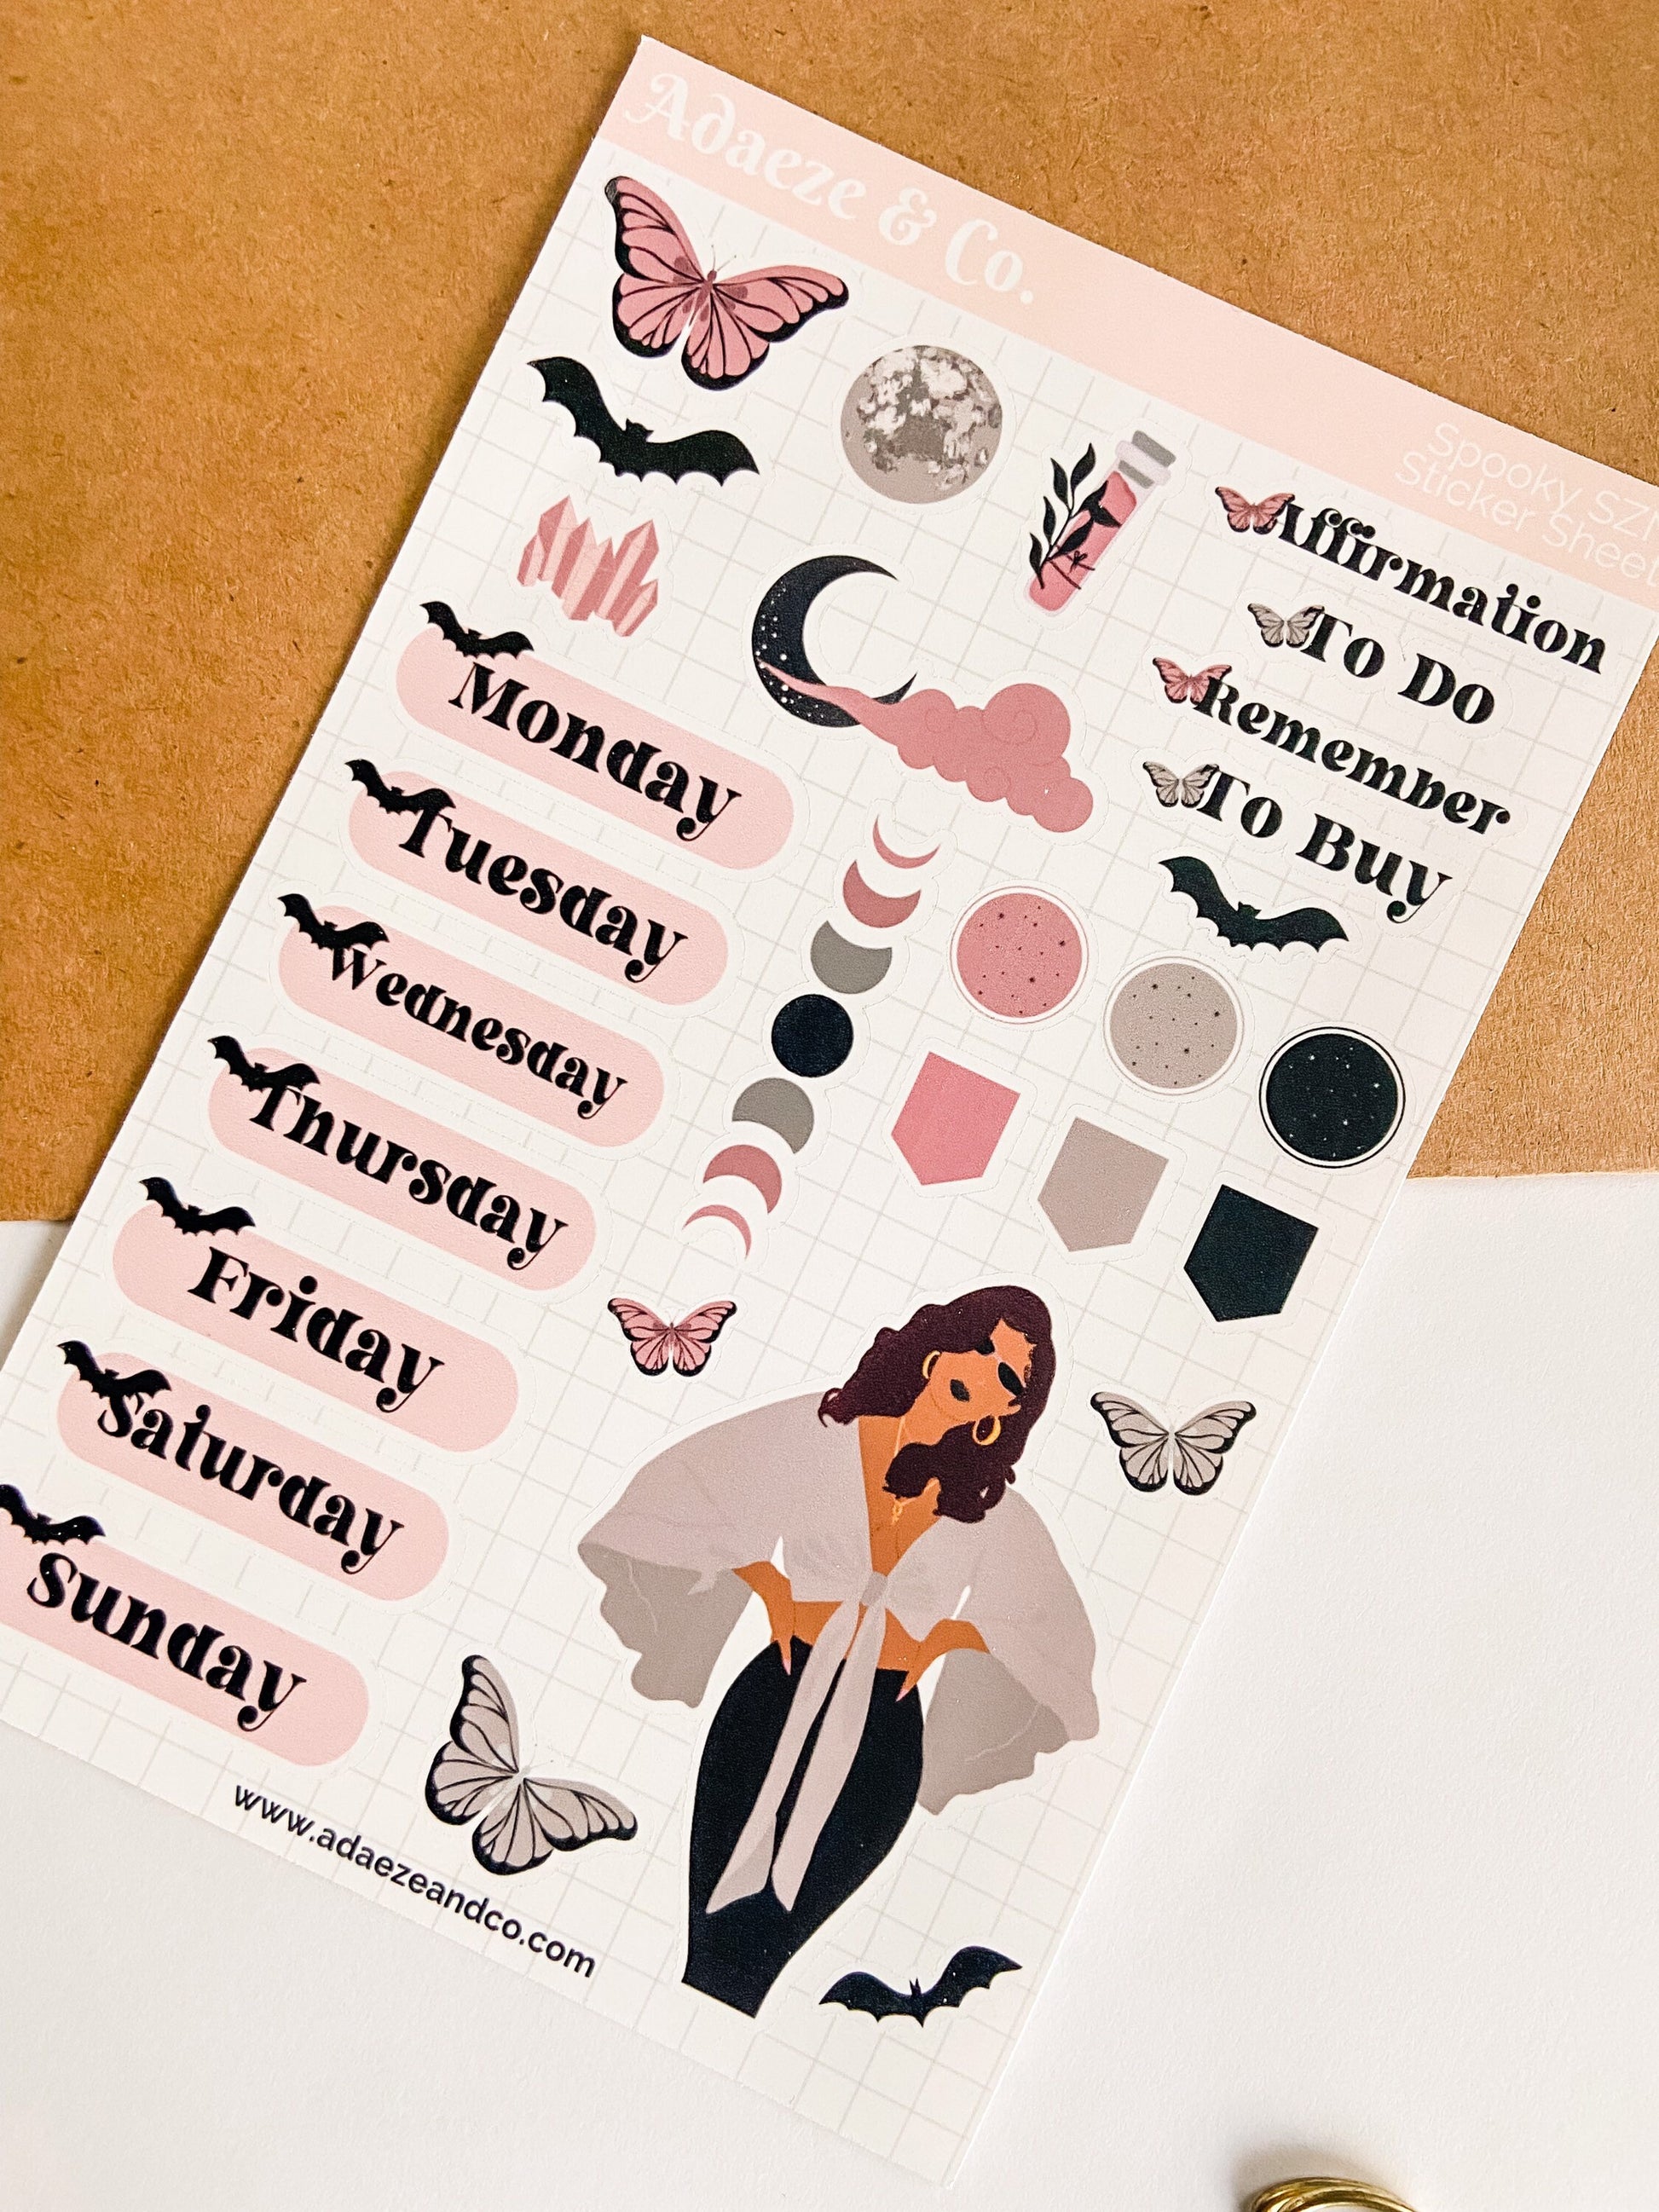 Halloween Little Squad Mini Sticker Sheet – shandstudio.